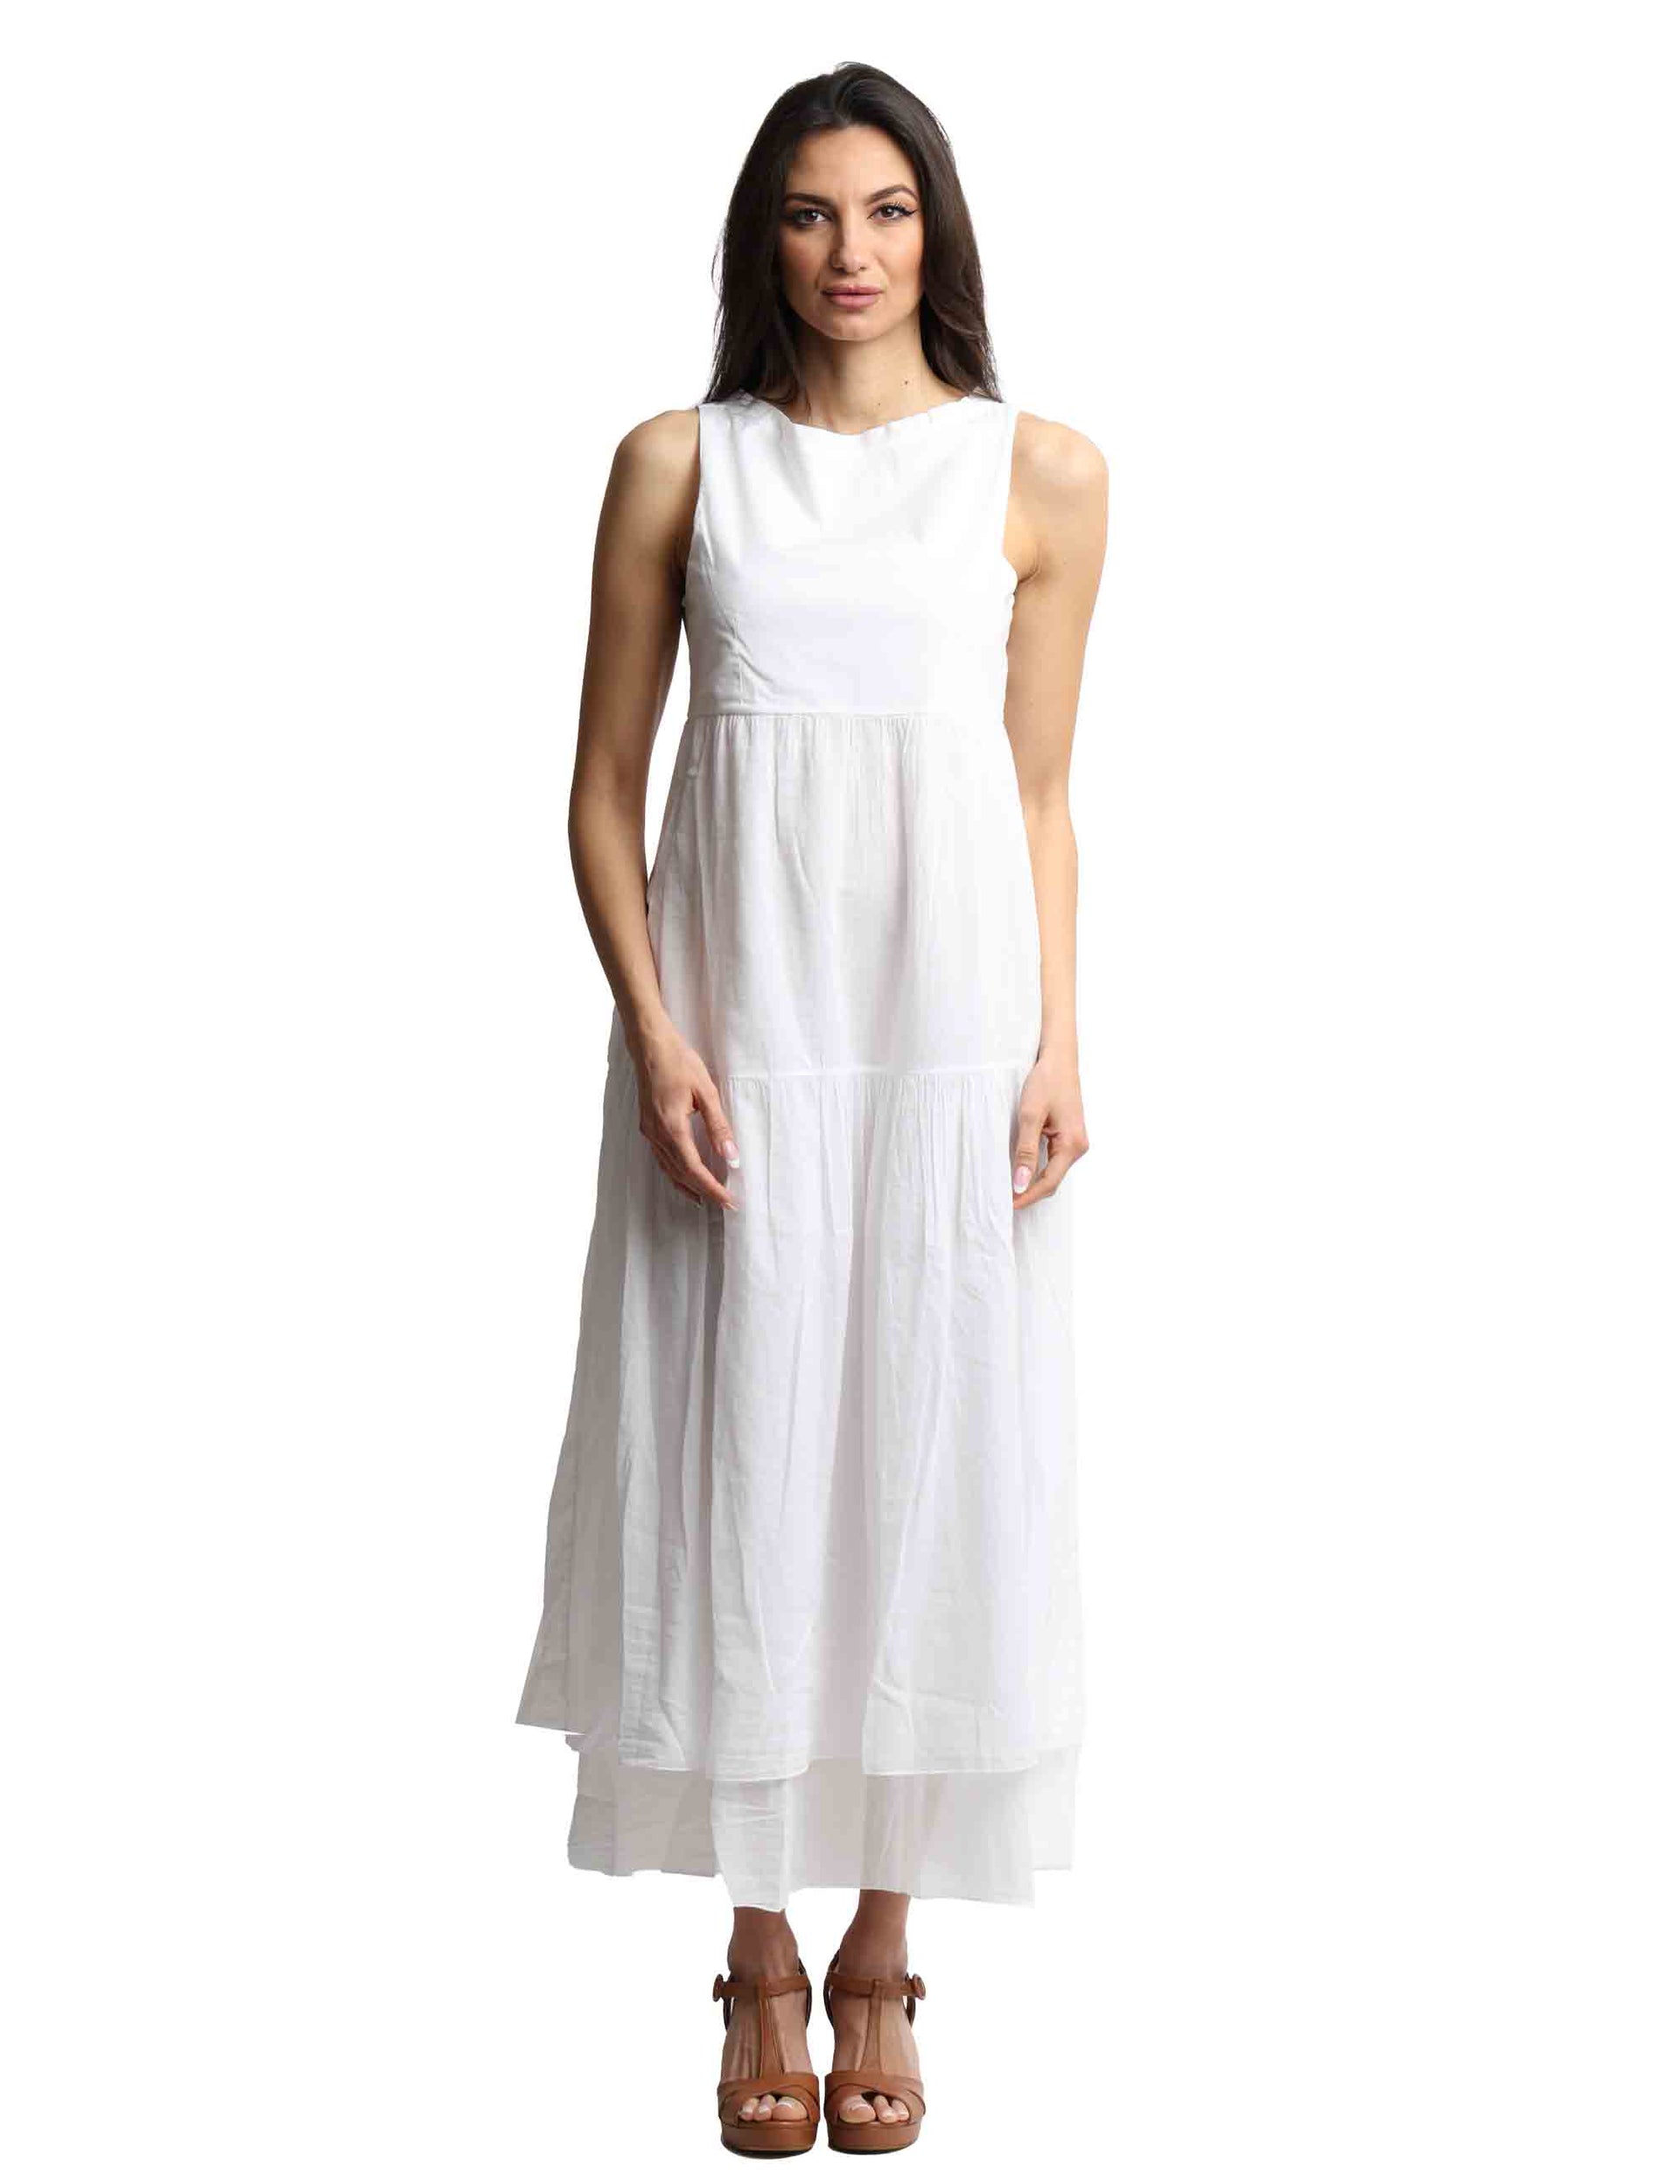 Long women's dresses in white cotton